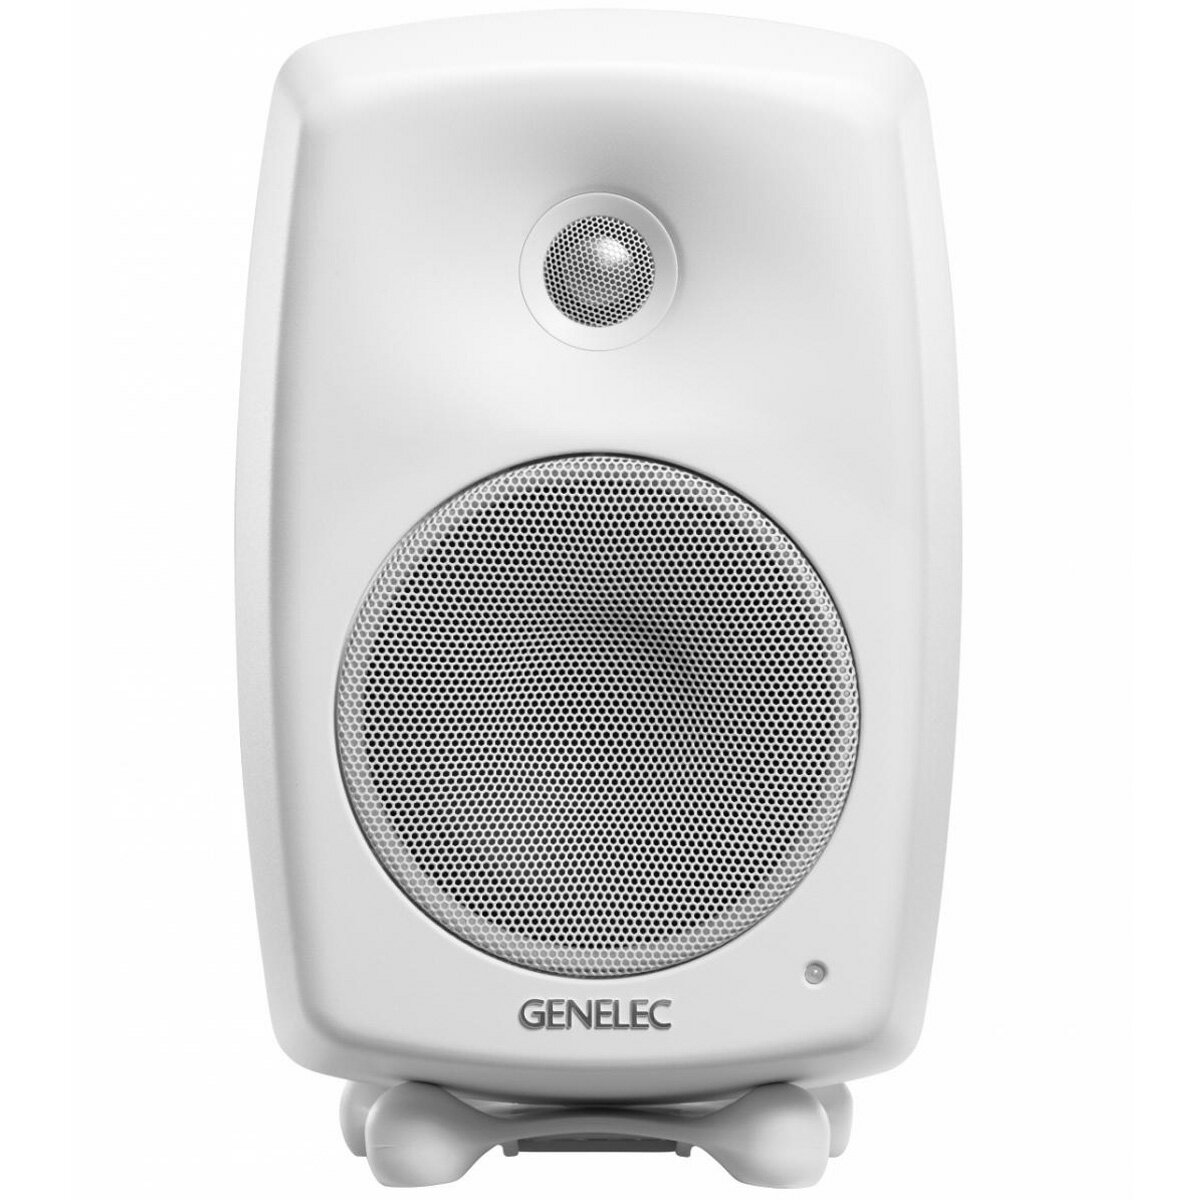 GENELEC ジェネレック / G Three ホワイト (1本) Home Audio Systems【お取り寄せ商品】